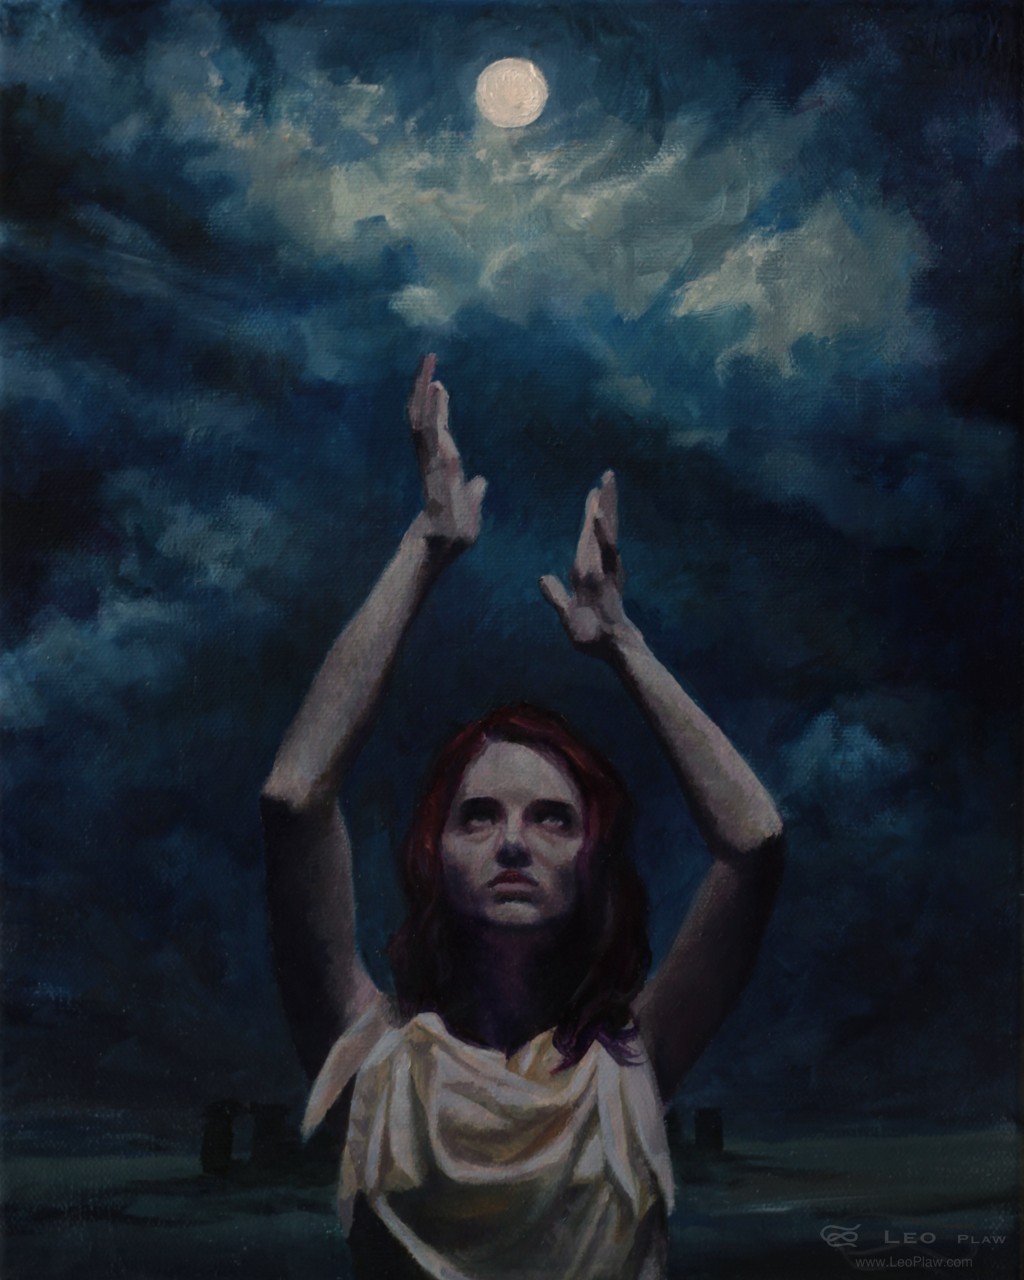 "Lunation", Leo Plaw, 24 x 30cm, oil on canvas